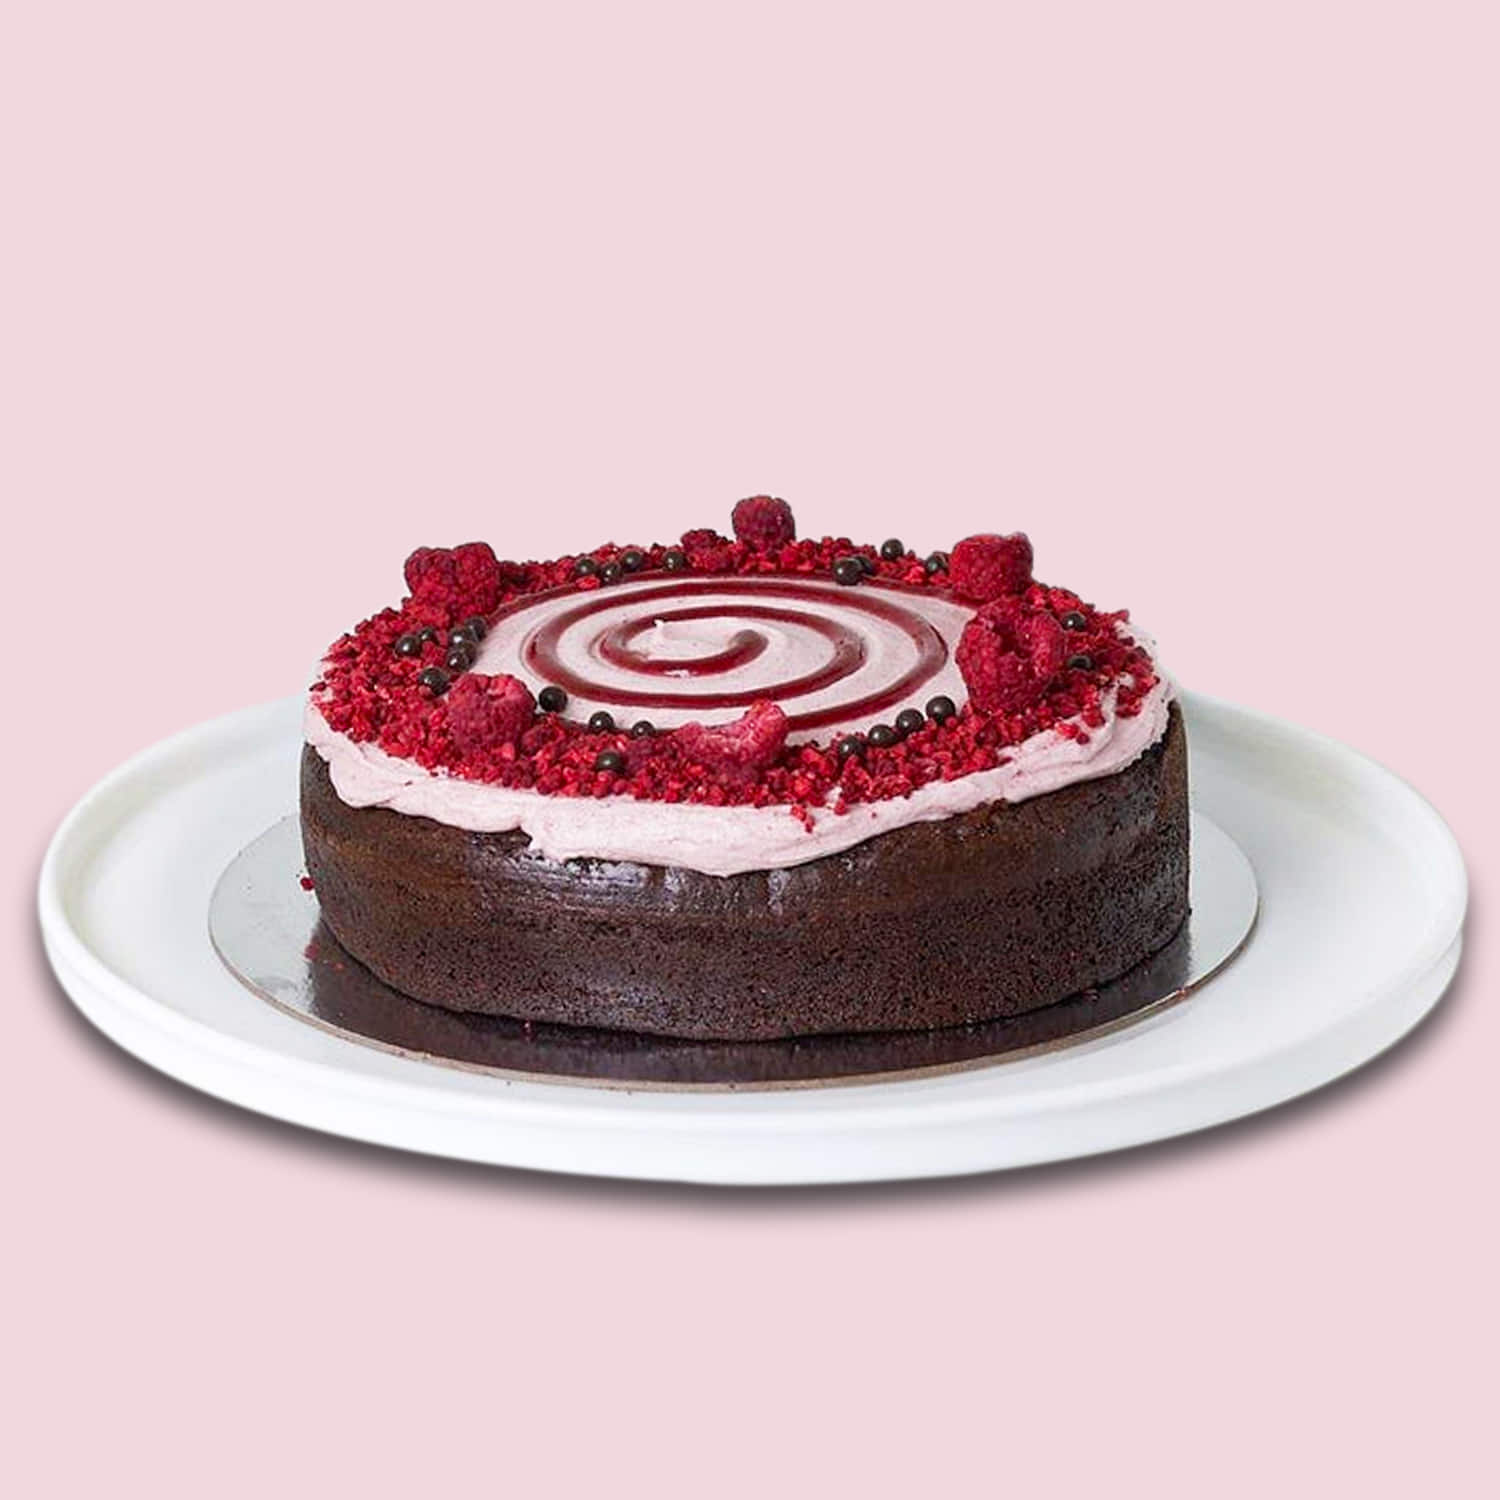 Send Chocolate Birthday Cake Online to India